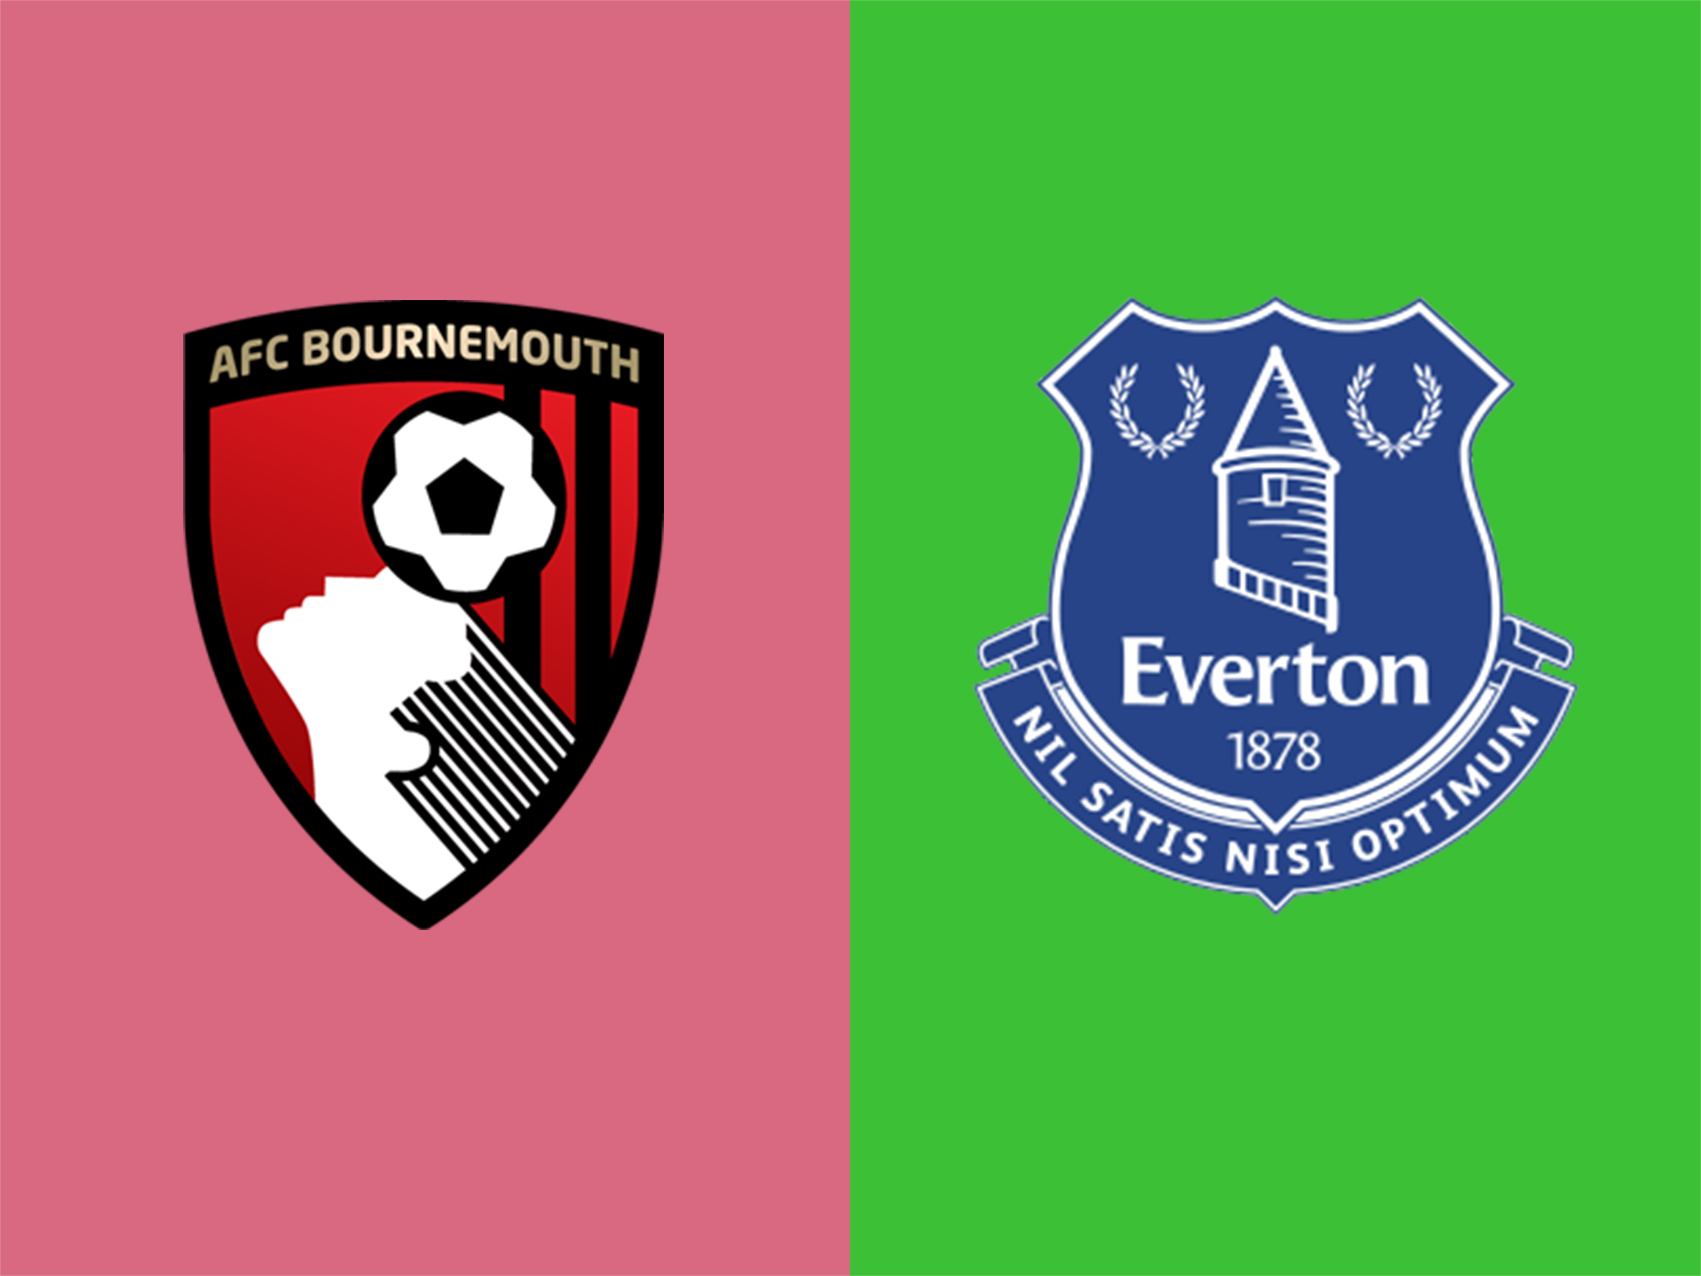 soi-keo-ca-cuoc-bong-da-ngay-14-9-Bournemouth-vs-Everton-do-it-thang-do-nhieu-b9